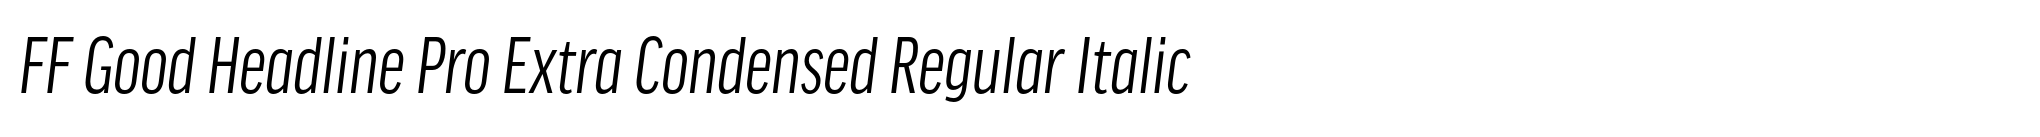 FF Good Headline Pro Extra Condensed Regular Italic image